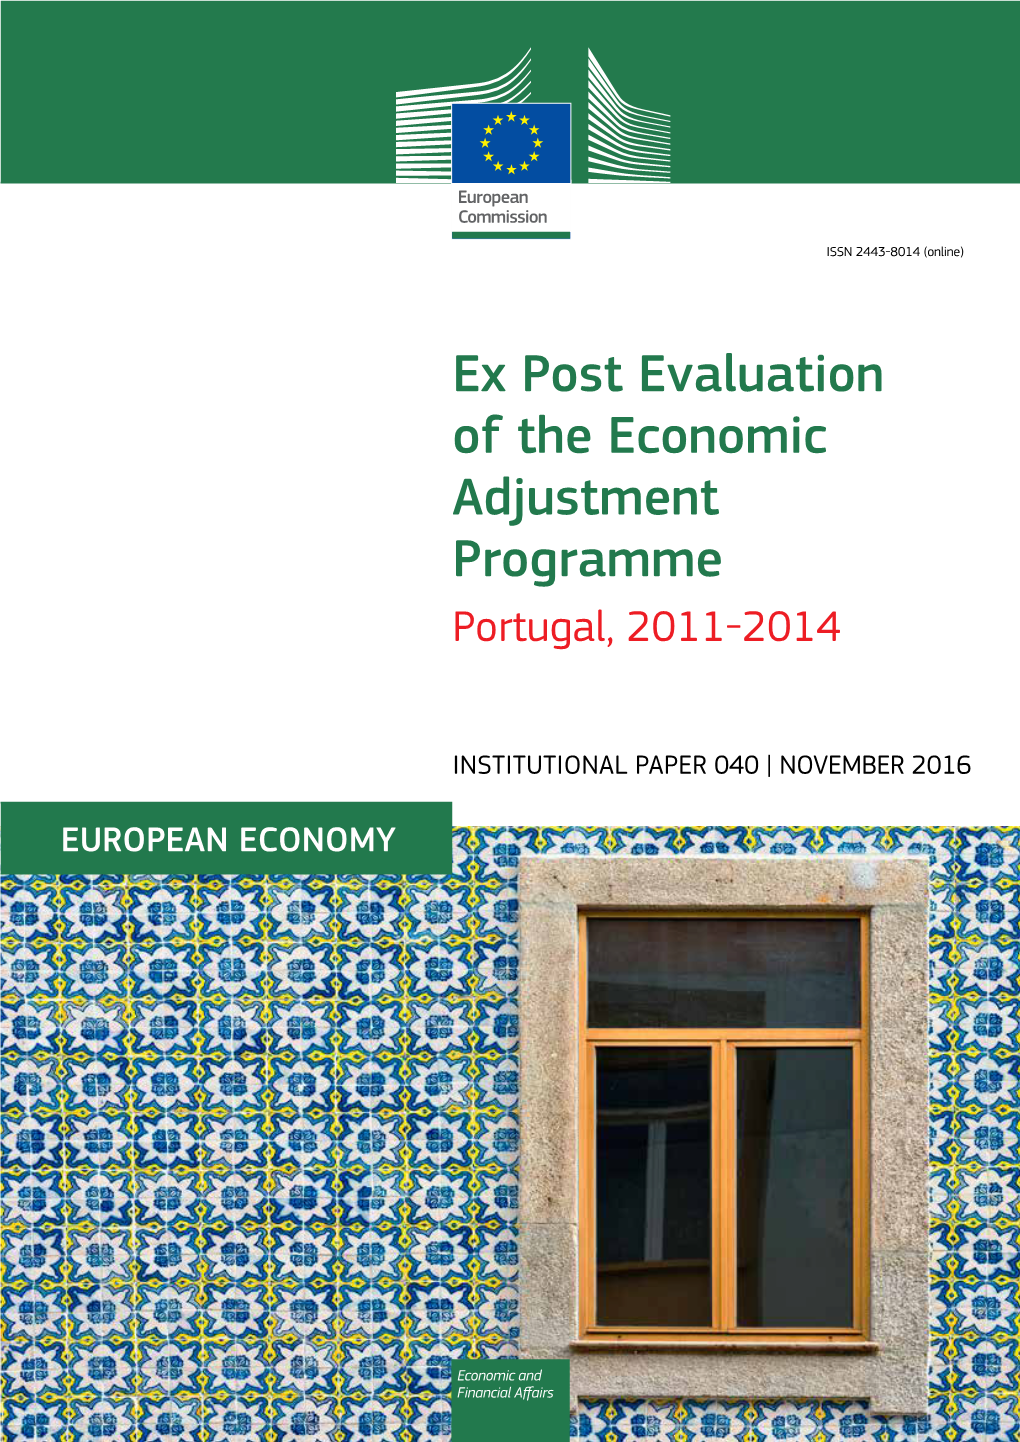 Ex Post Evaluation of the Economic Adjustment Programme. Portugal